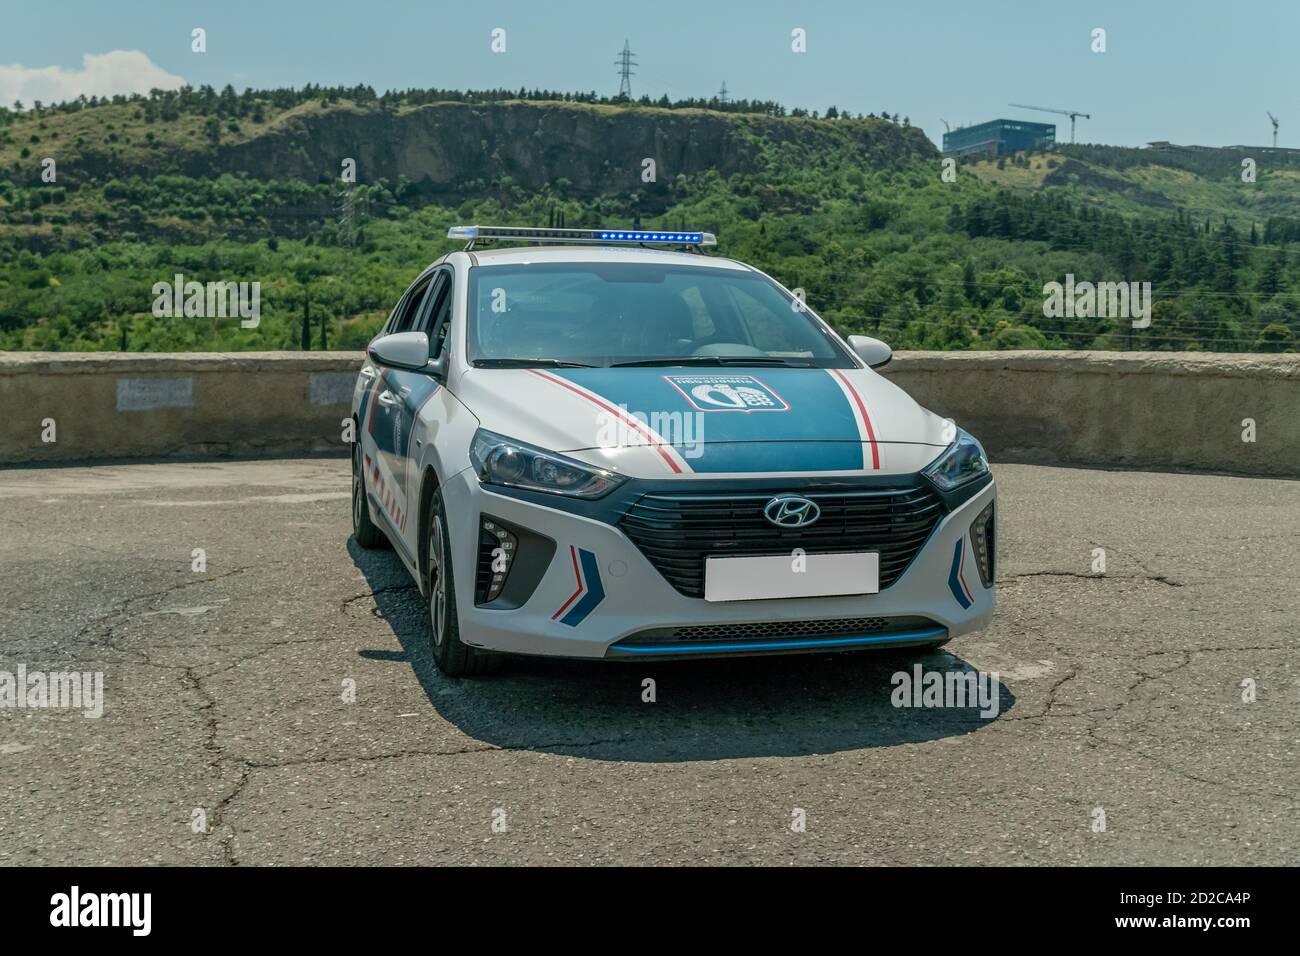 Tbilisi, Georgia - June 28 2019: Police car on an asphalt road against the mountains on a sunny clear day Stock Photo